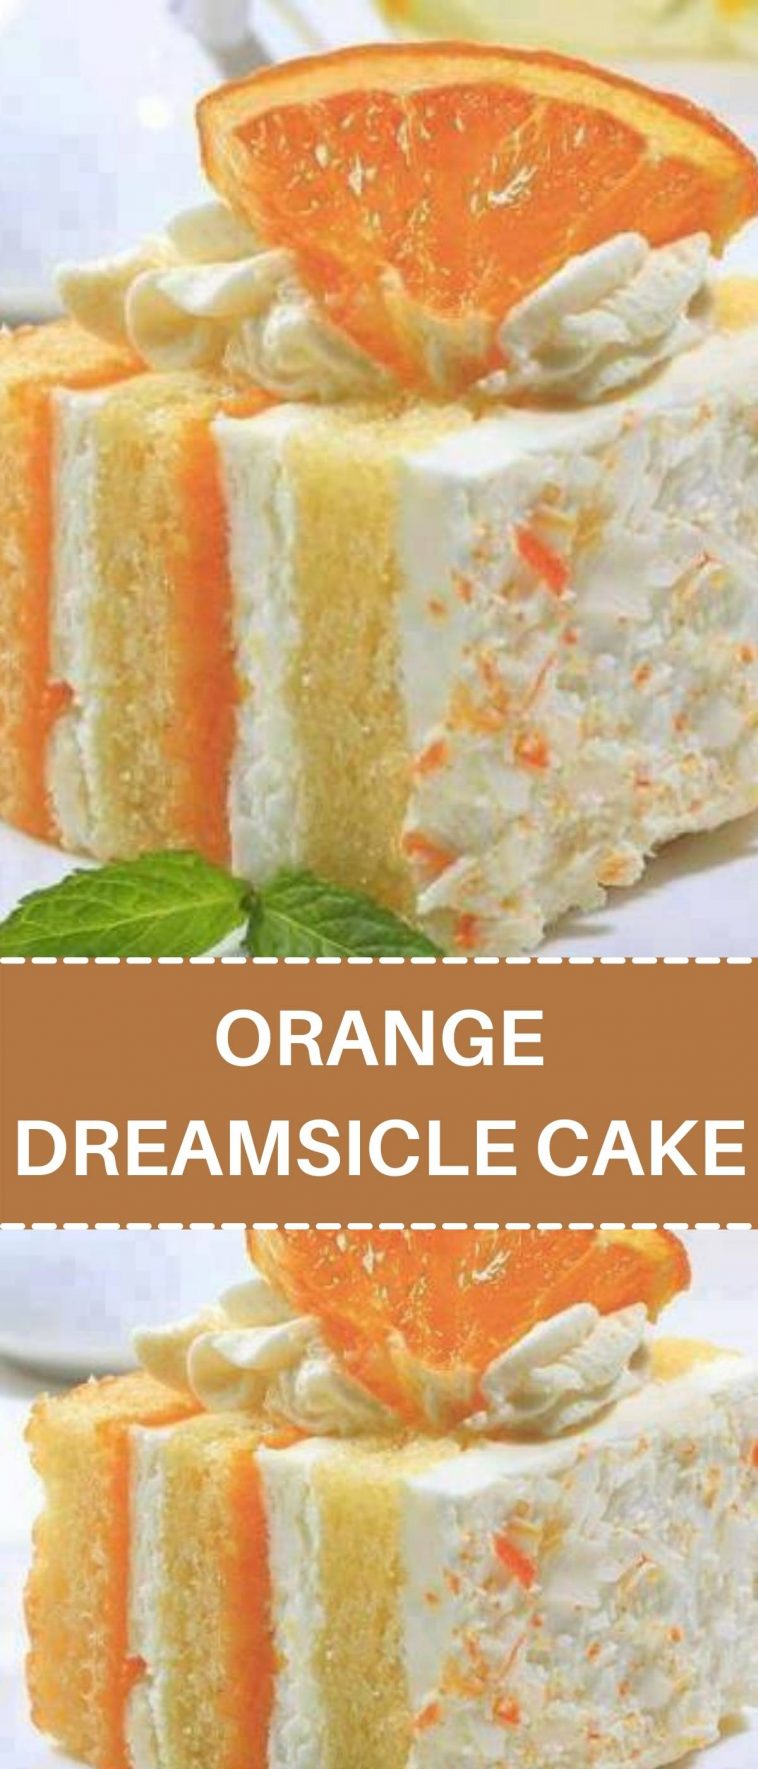 ORANGE DREAMSICLE CAKE